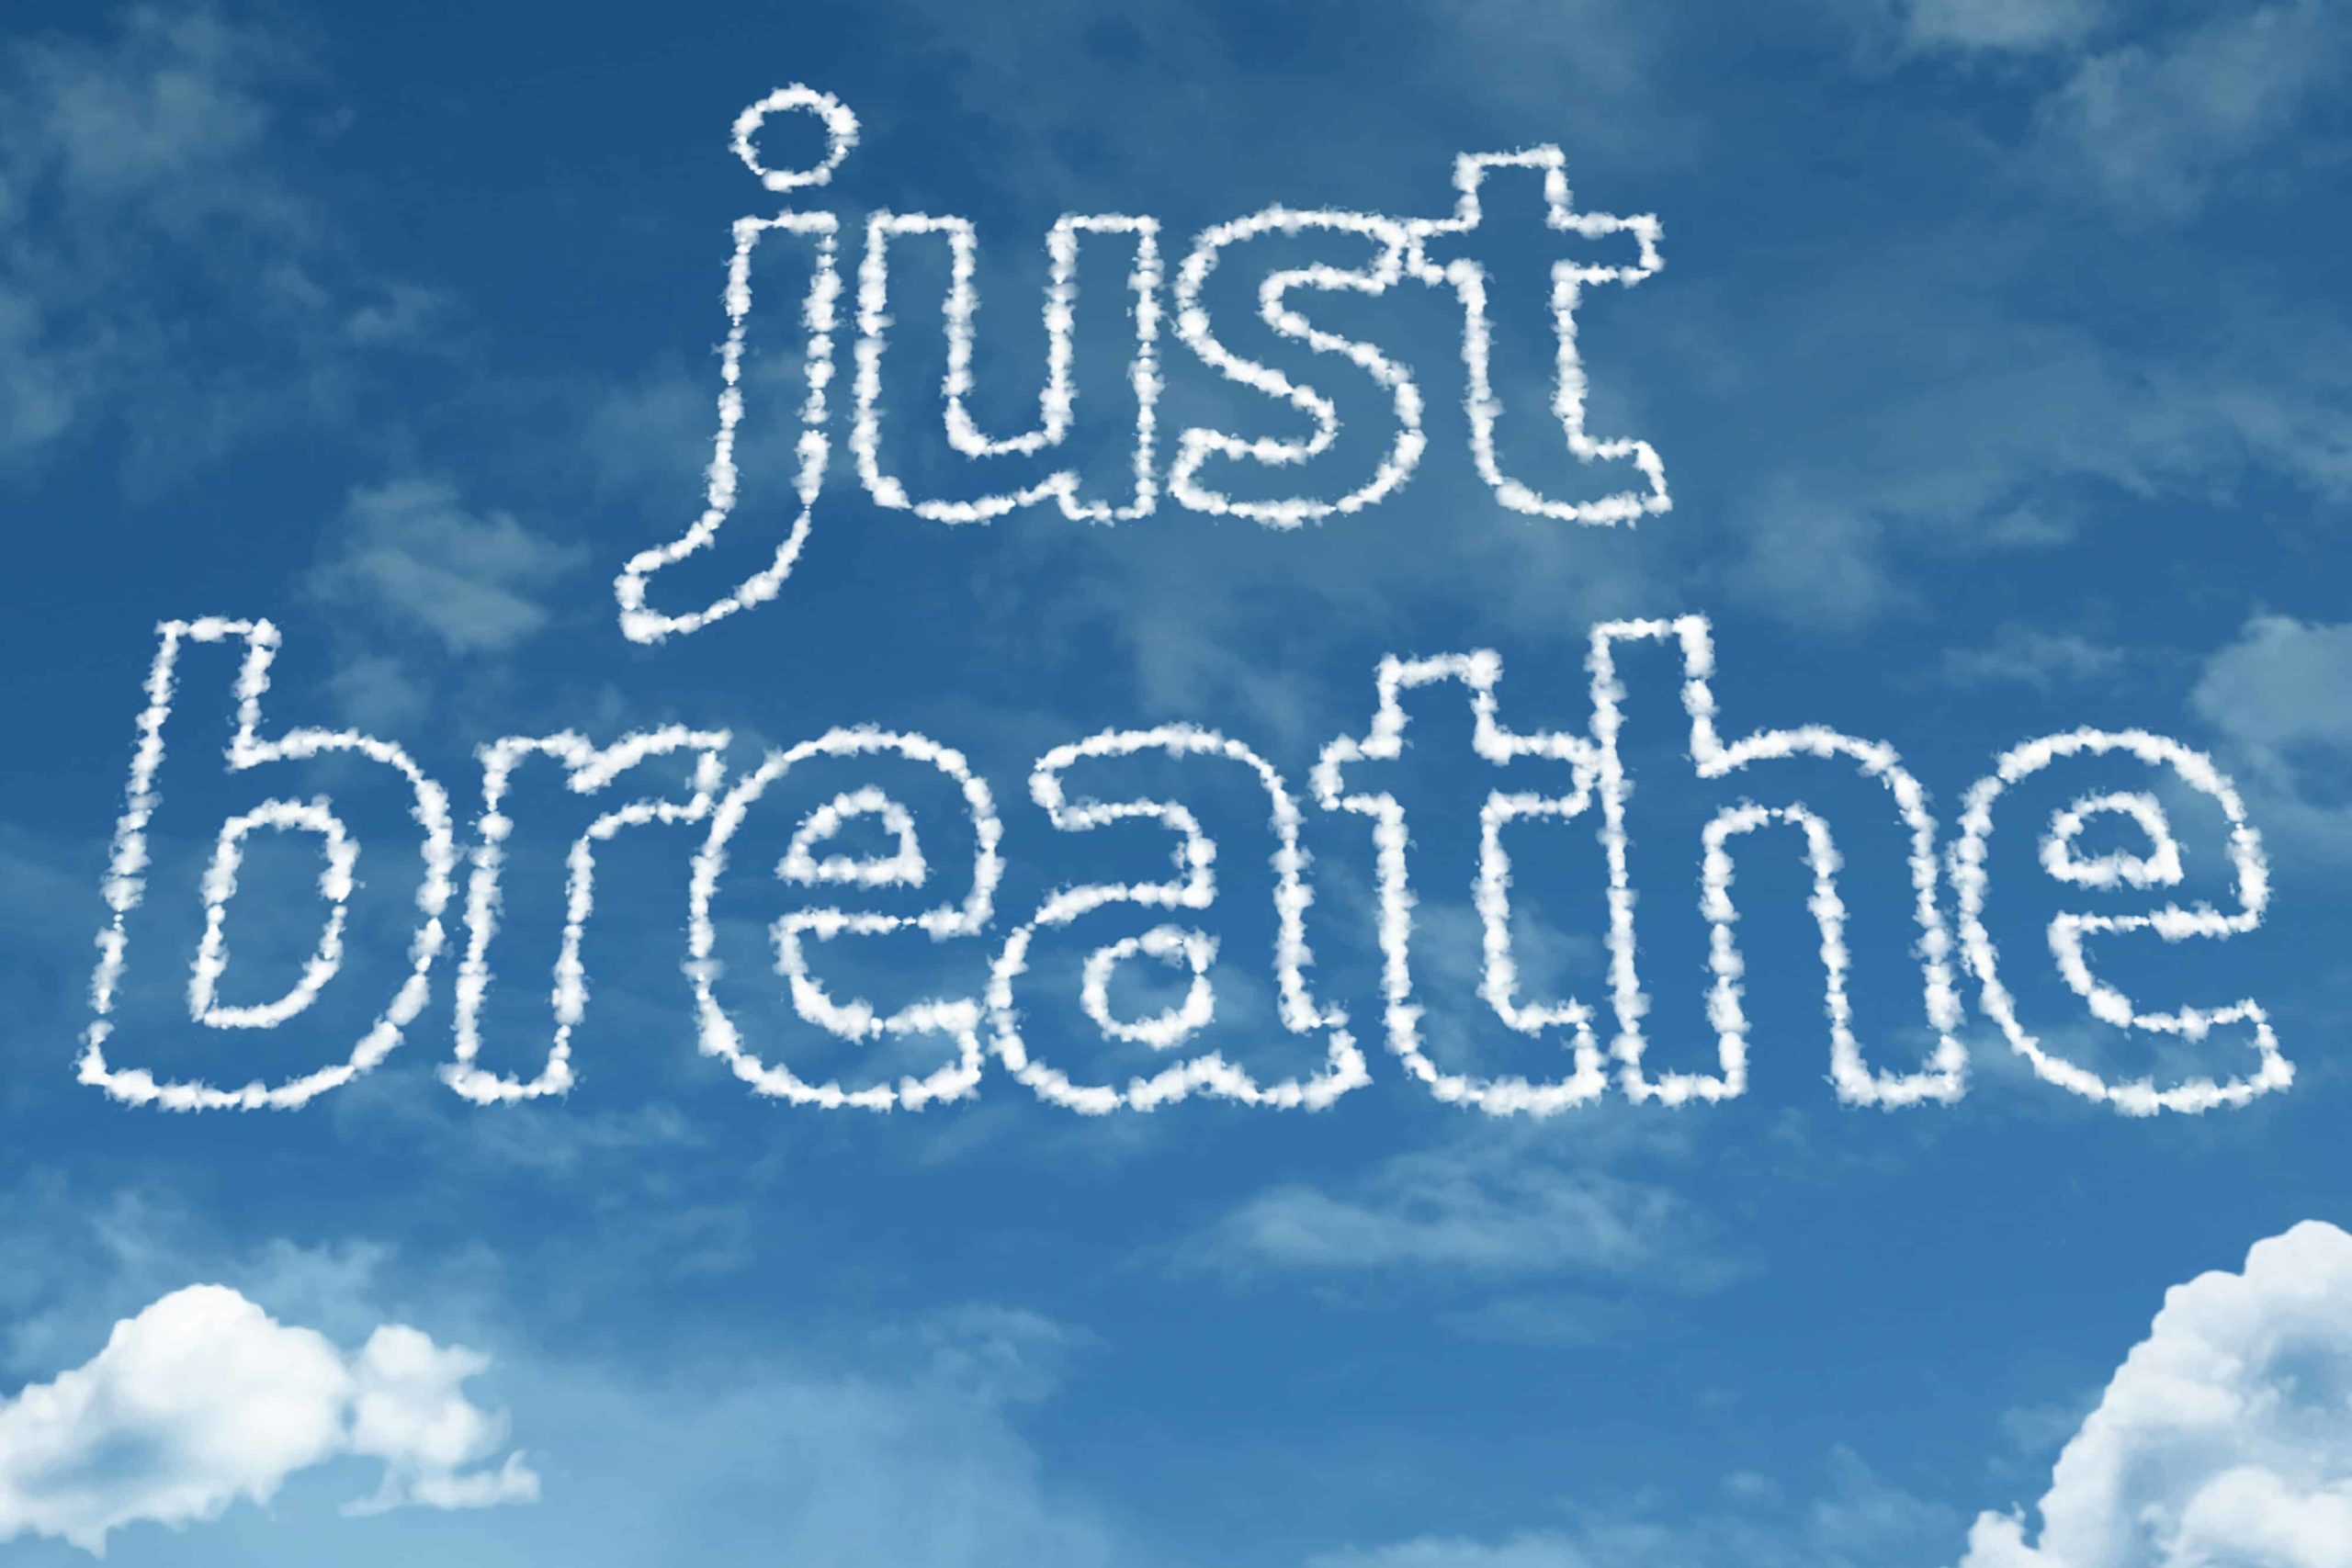 "Just breathe" written in clouds on a blue sky.